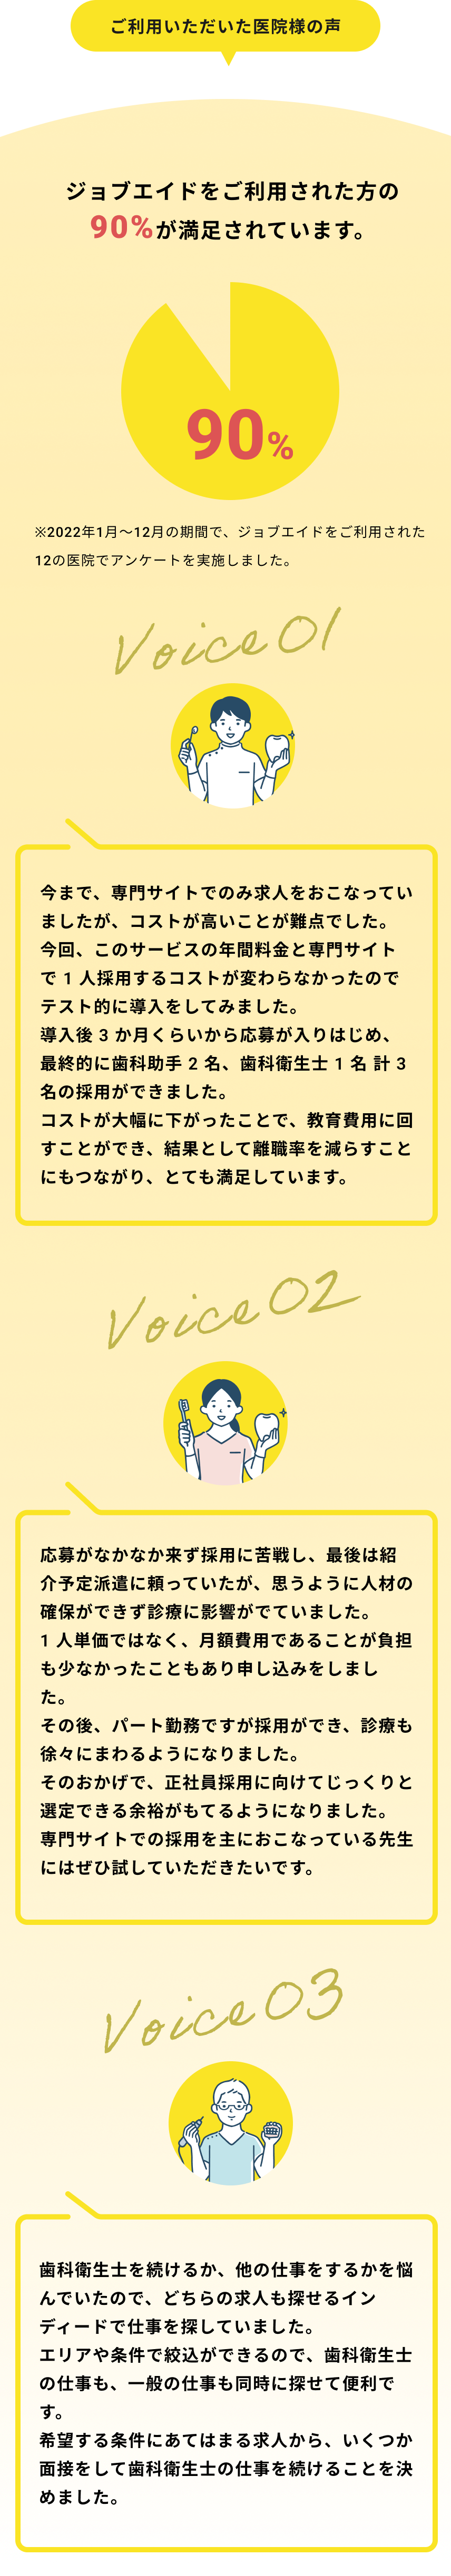 user voice